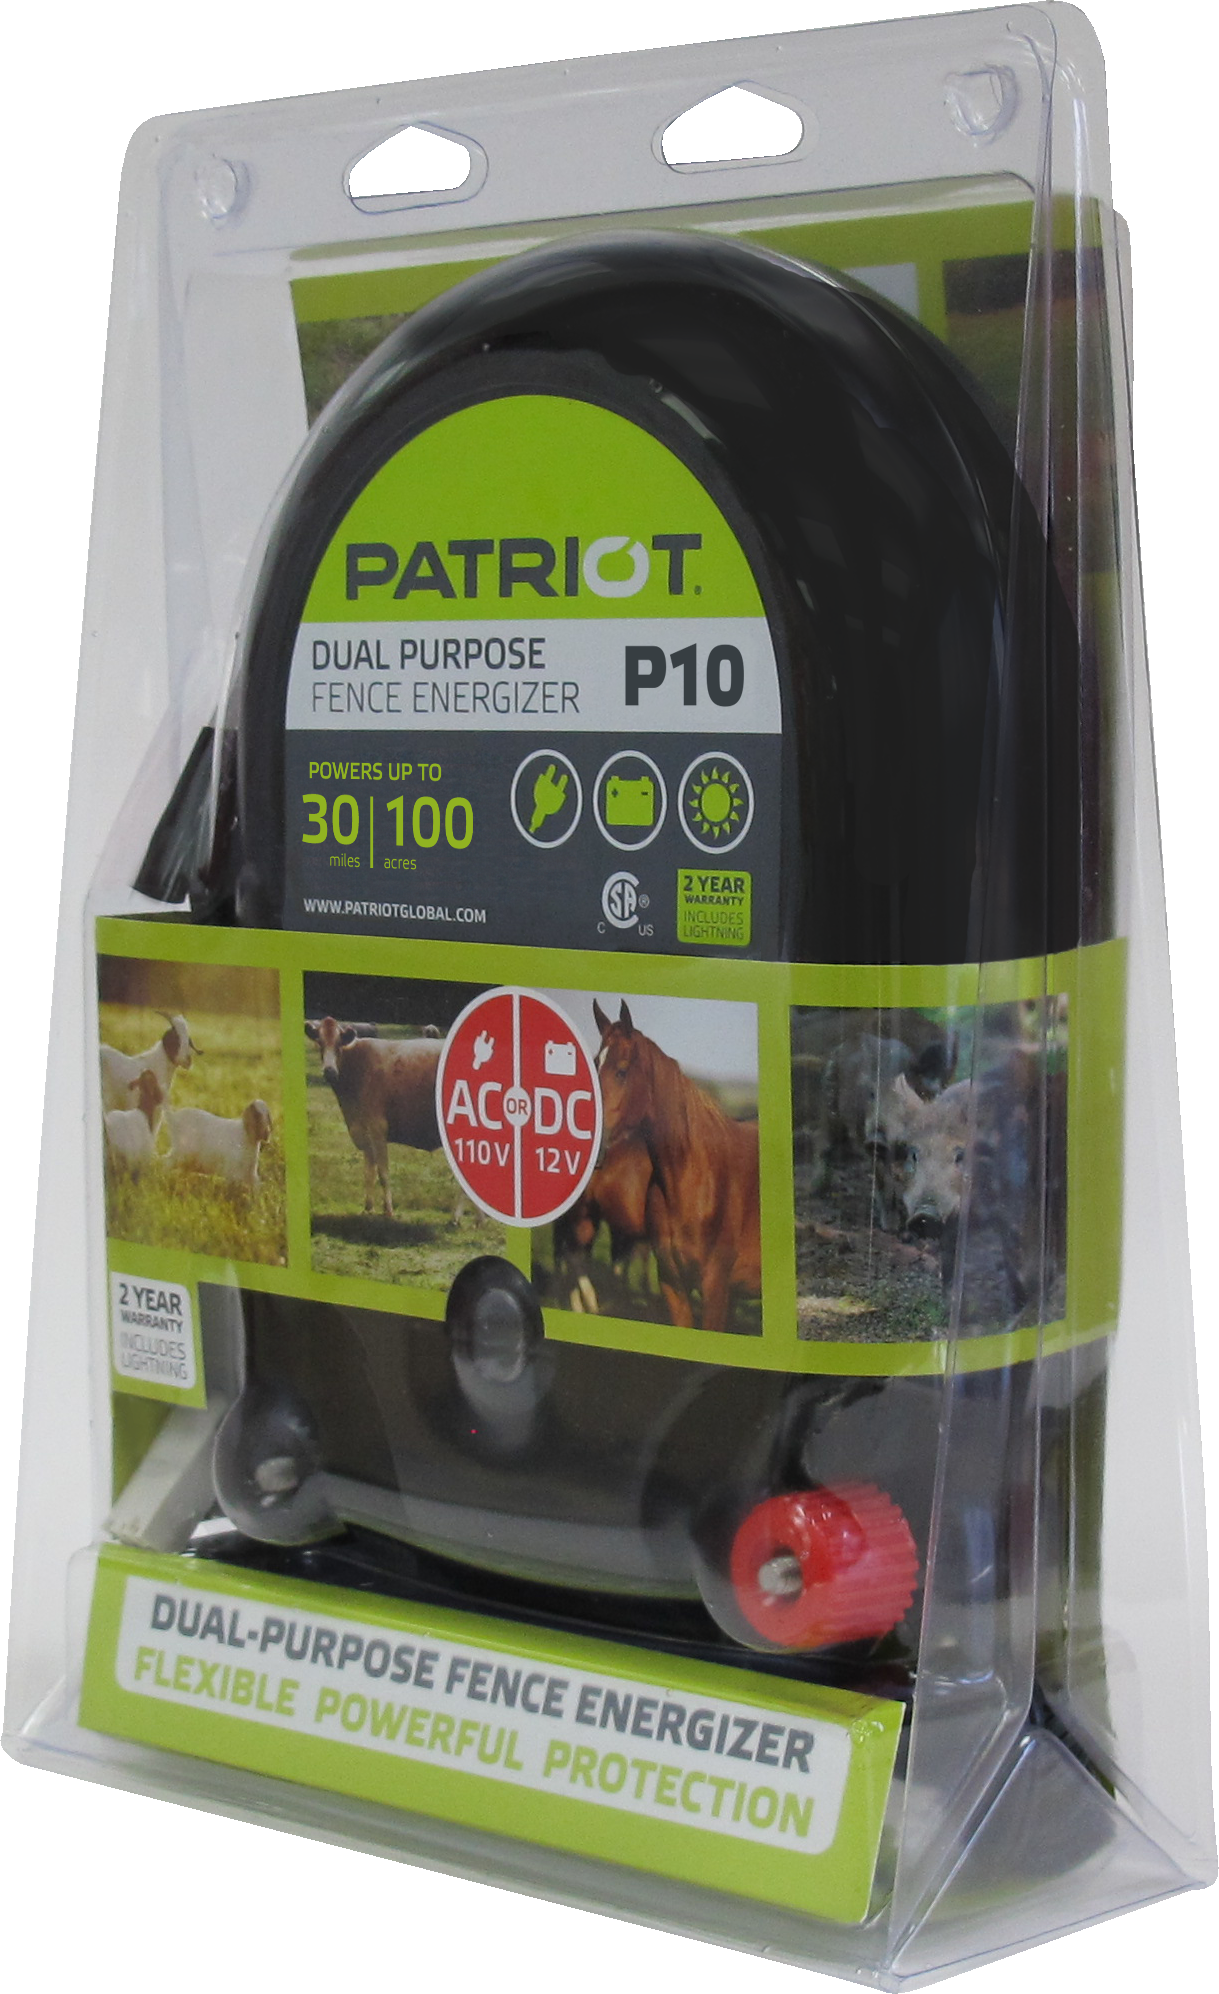 PATRIOT™ p10 Dual Purpose Fence Energizer